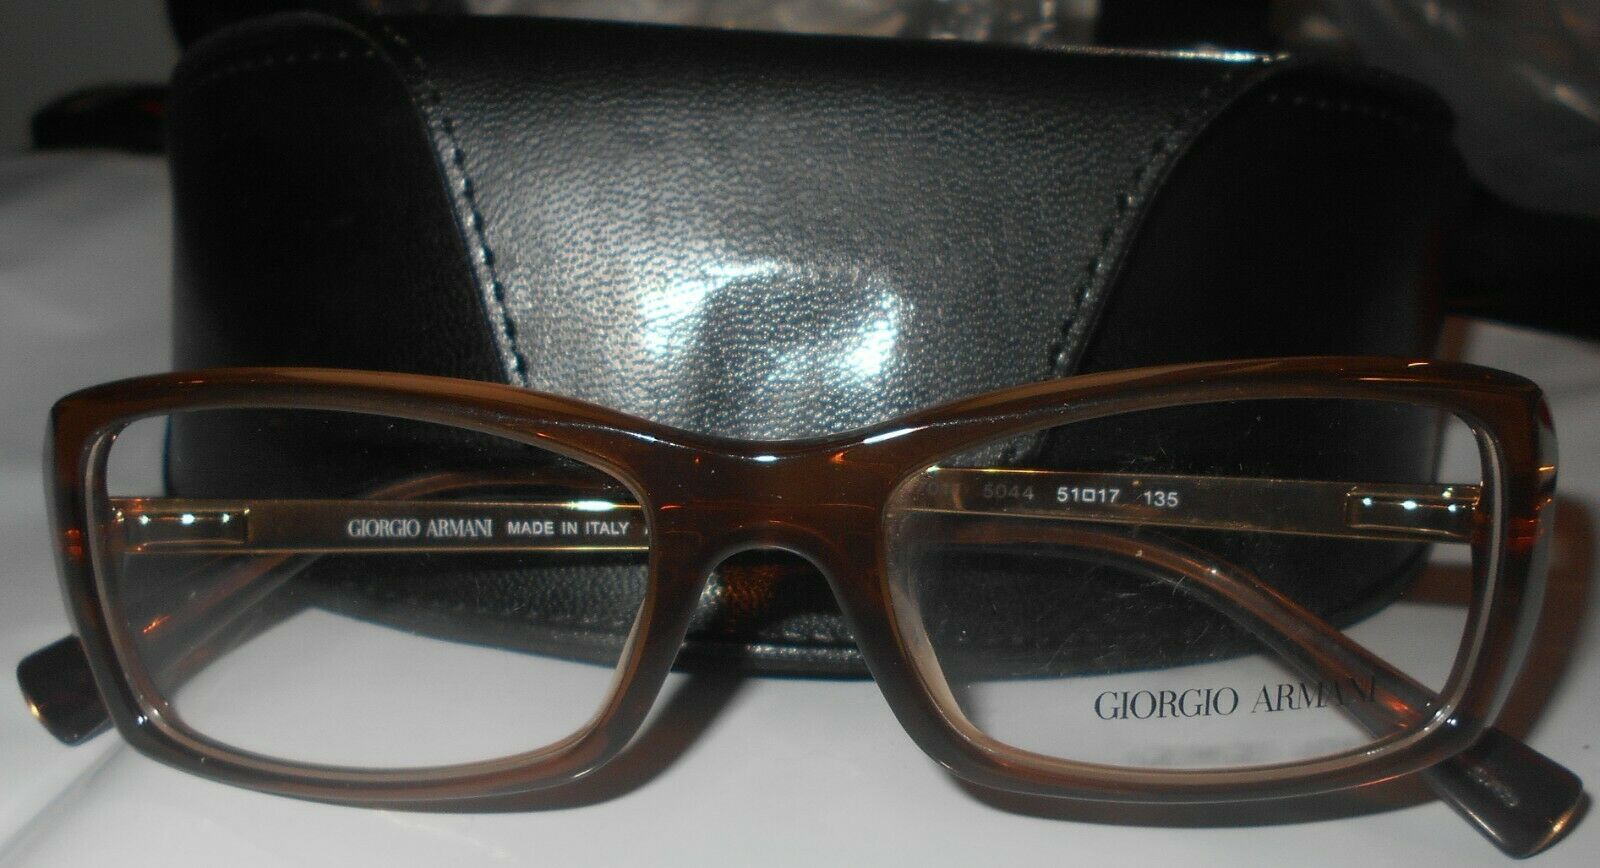 Giorgio Armani glasses AR7011 -5044 - 51 17 - 135 -Made in Italy -new with case - $49.99